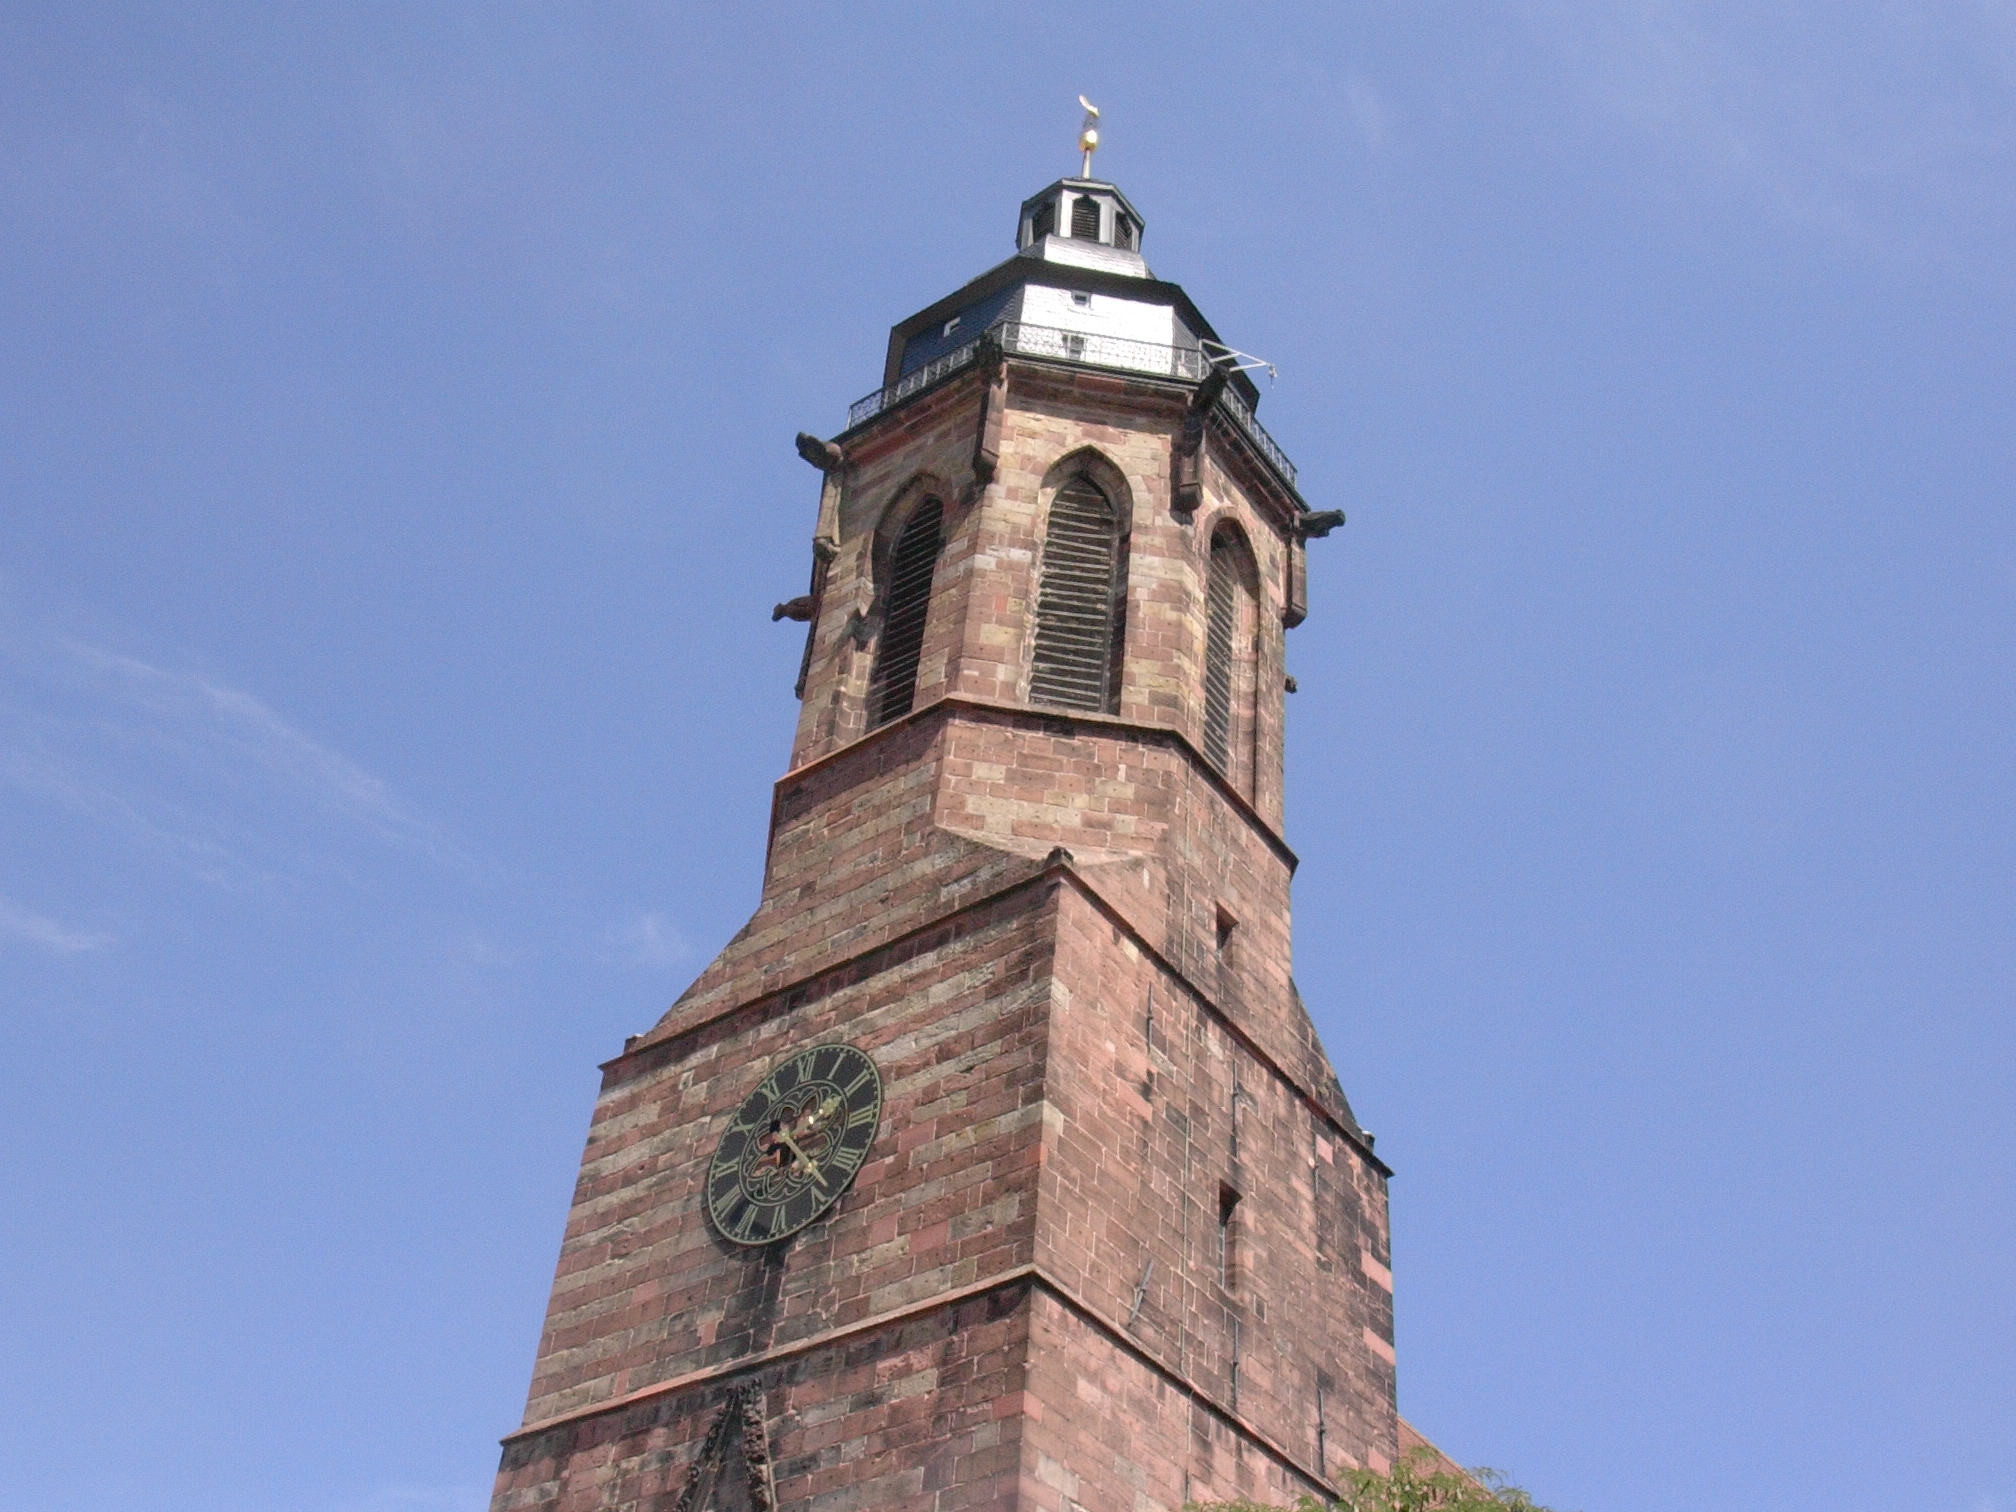 Datei:Stiftskirche-Turm Landau.jpg